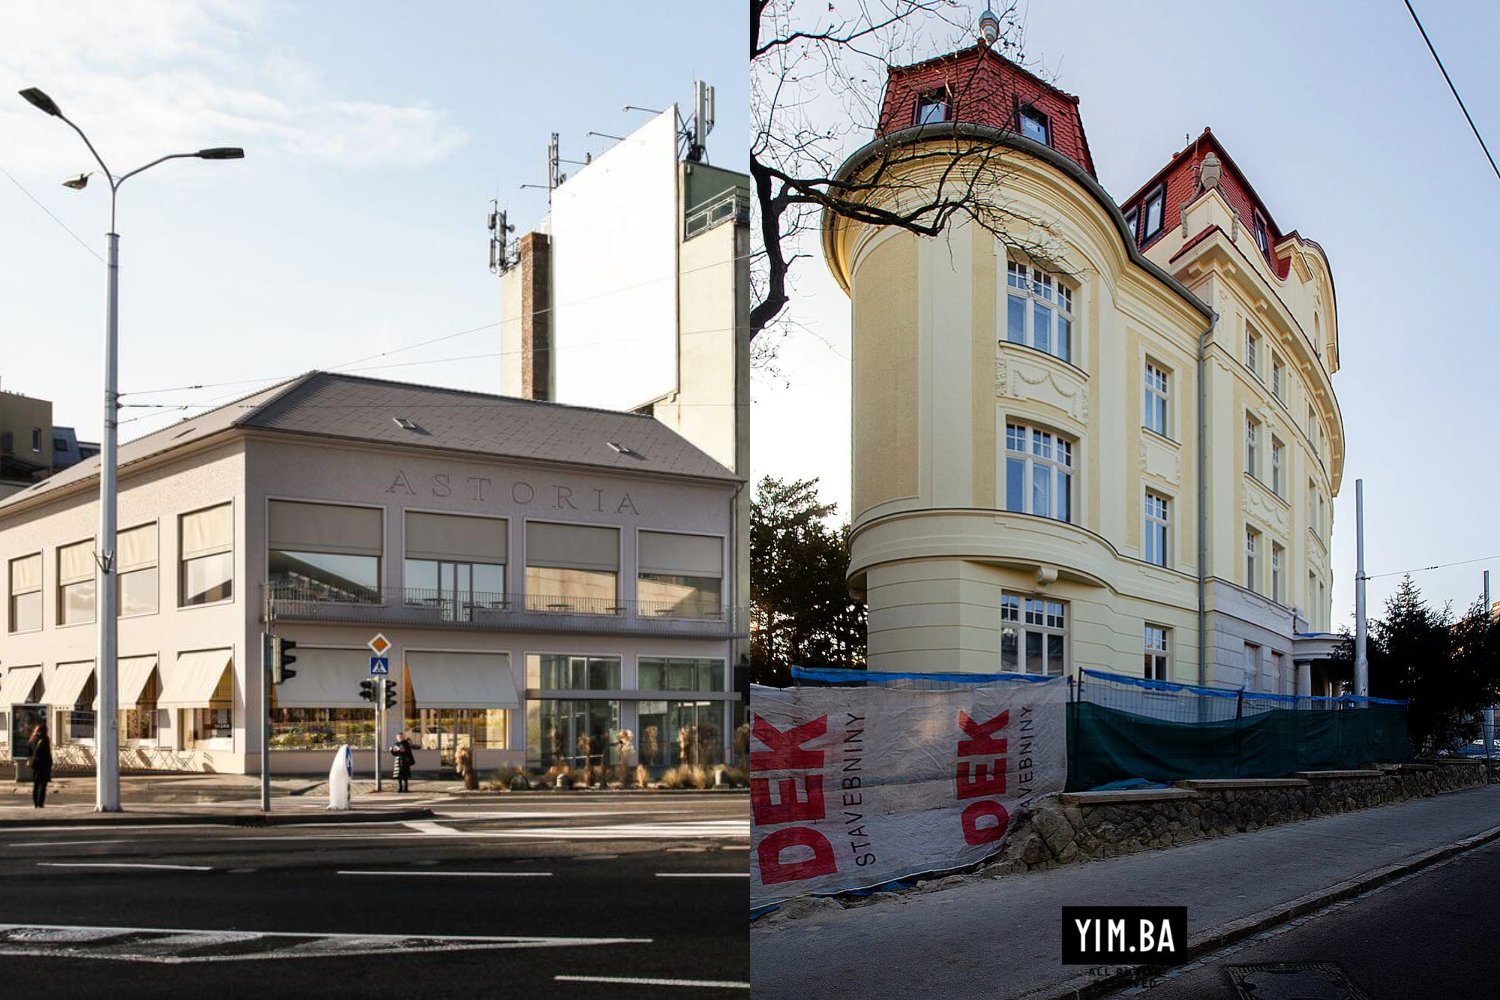 Zdroj: GRUP Architects / DIMATZ, Nino Belovič / YIM.BA